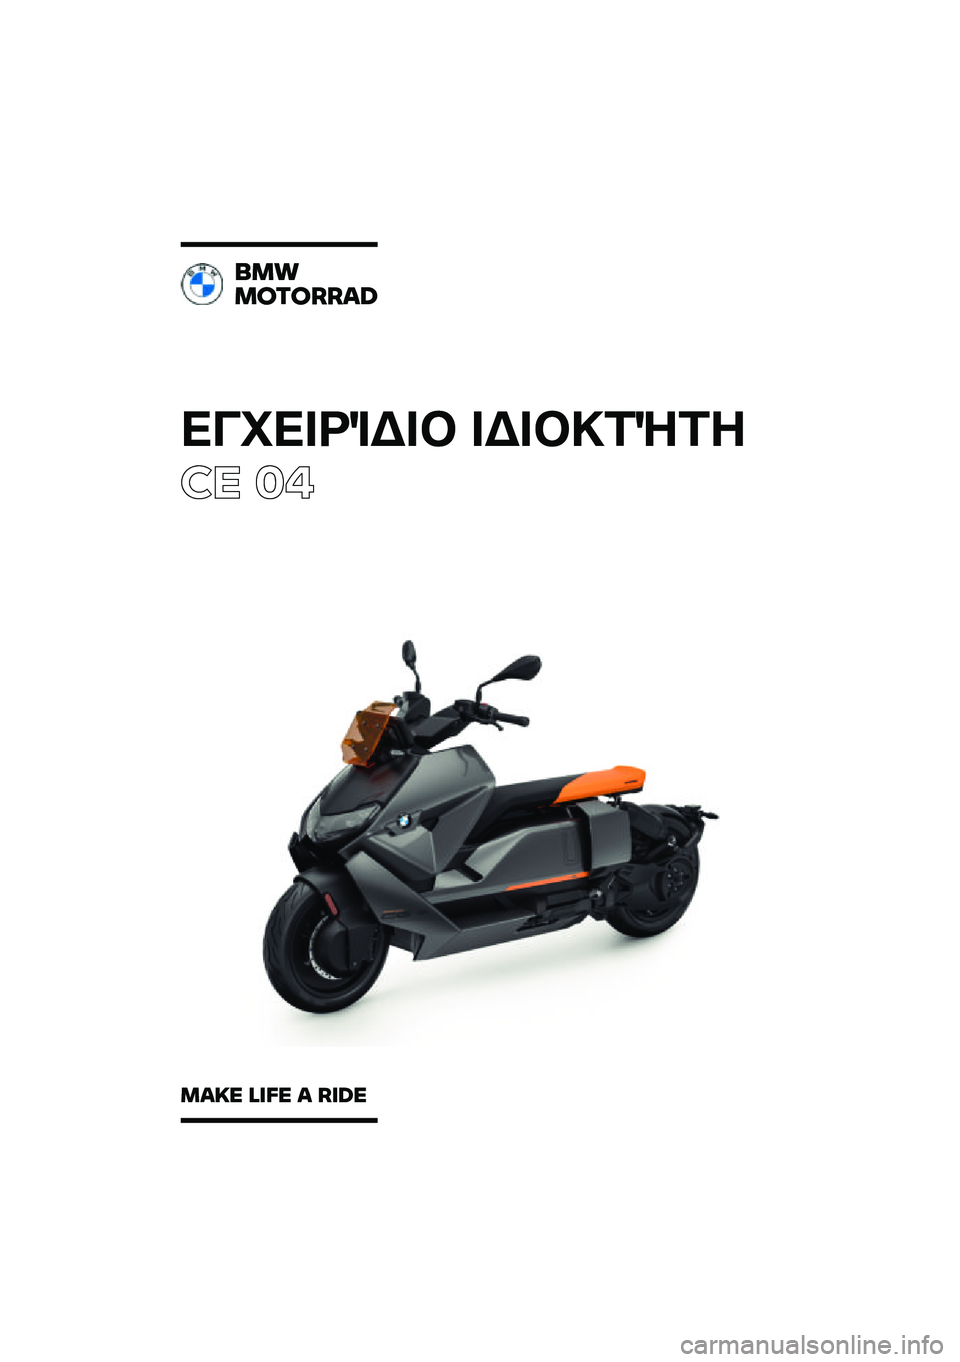 BMW MOTORRAD CE 04 2021  Εγχειρίδιο ιδιοκτήτη (in Greek) ��������\b��	 ��\b��	�
��\f��
�� ��
���
�������\b�	
��\b�
� �\f�
�� �\b ��
�	� 